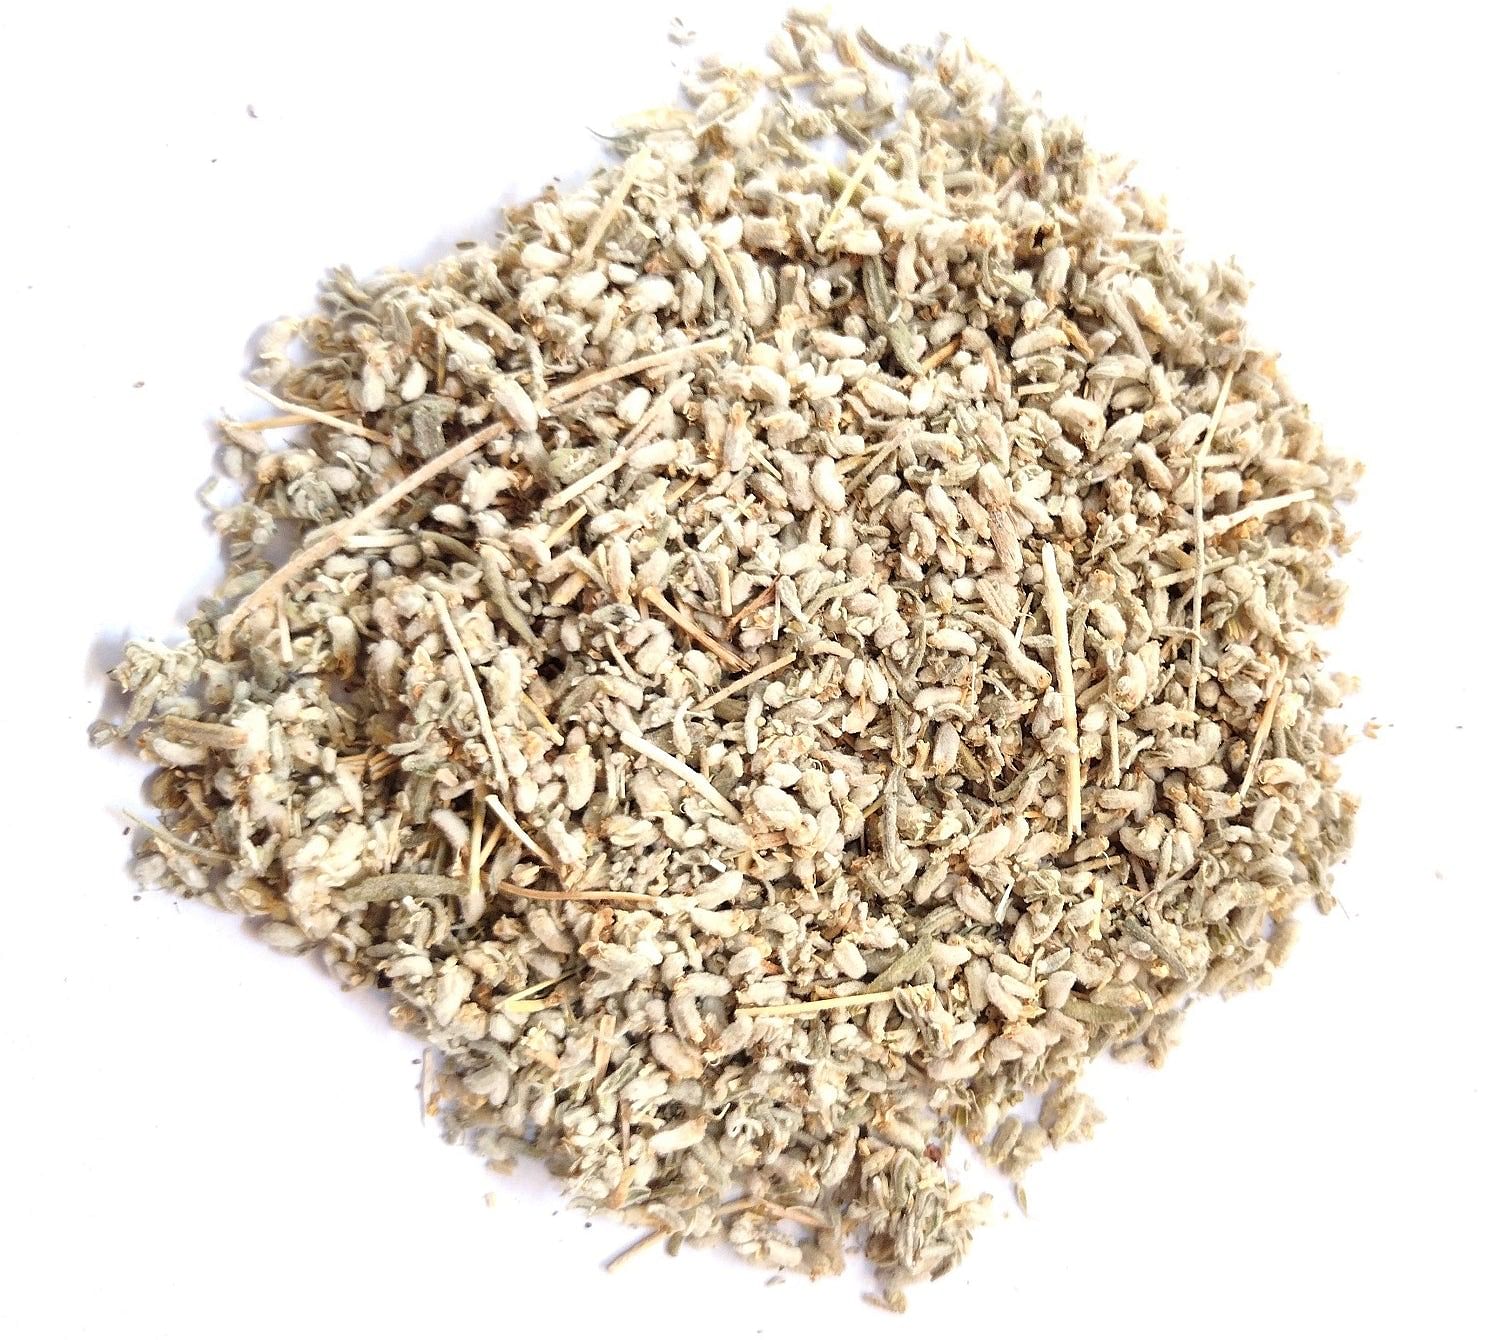 Mugwart-INDIAN MUGWORT-Indian Wormwood,- Artemisia indica -baranjasif-manjipatri/ Maipatri (Mugwort) -Nutrixia Food